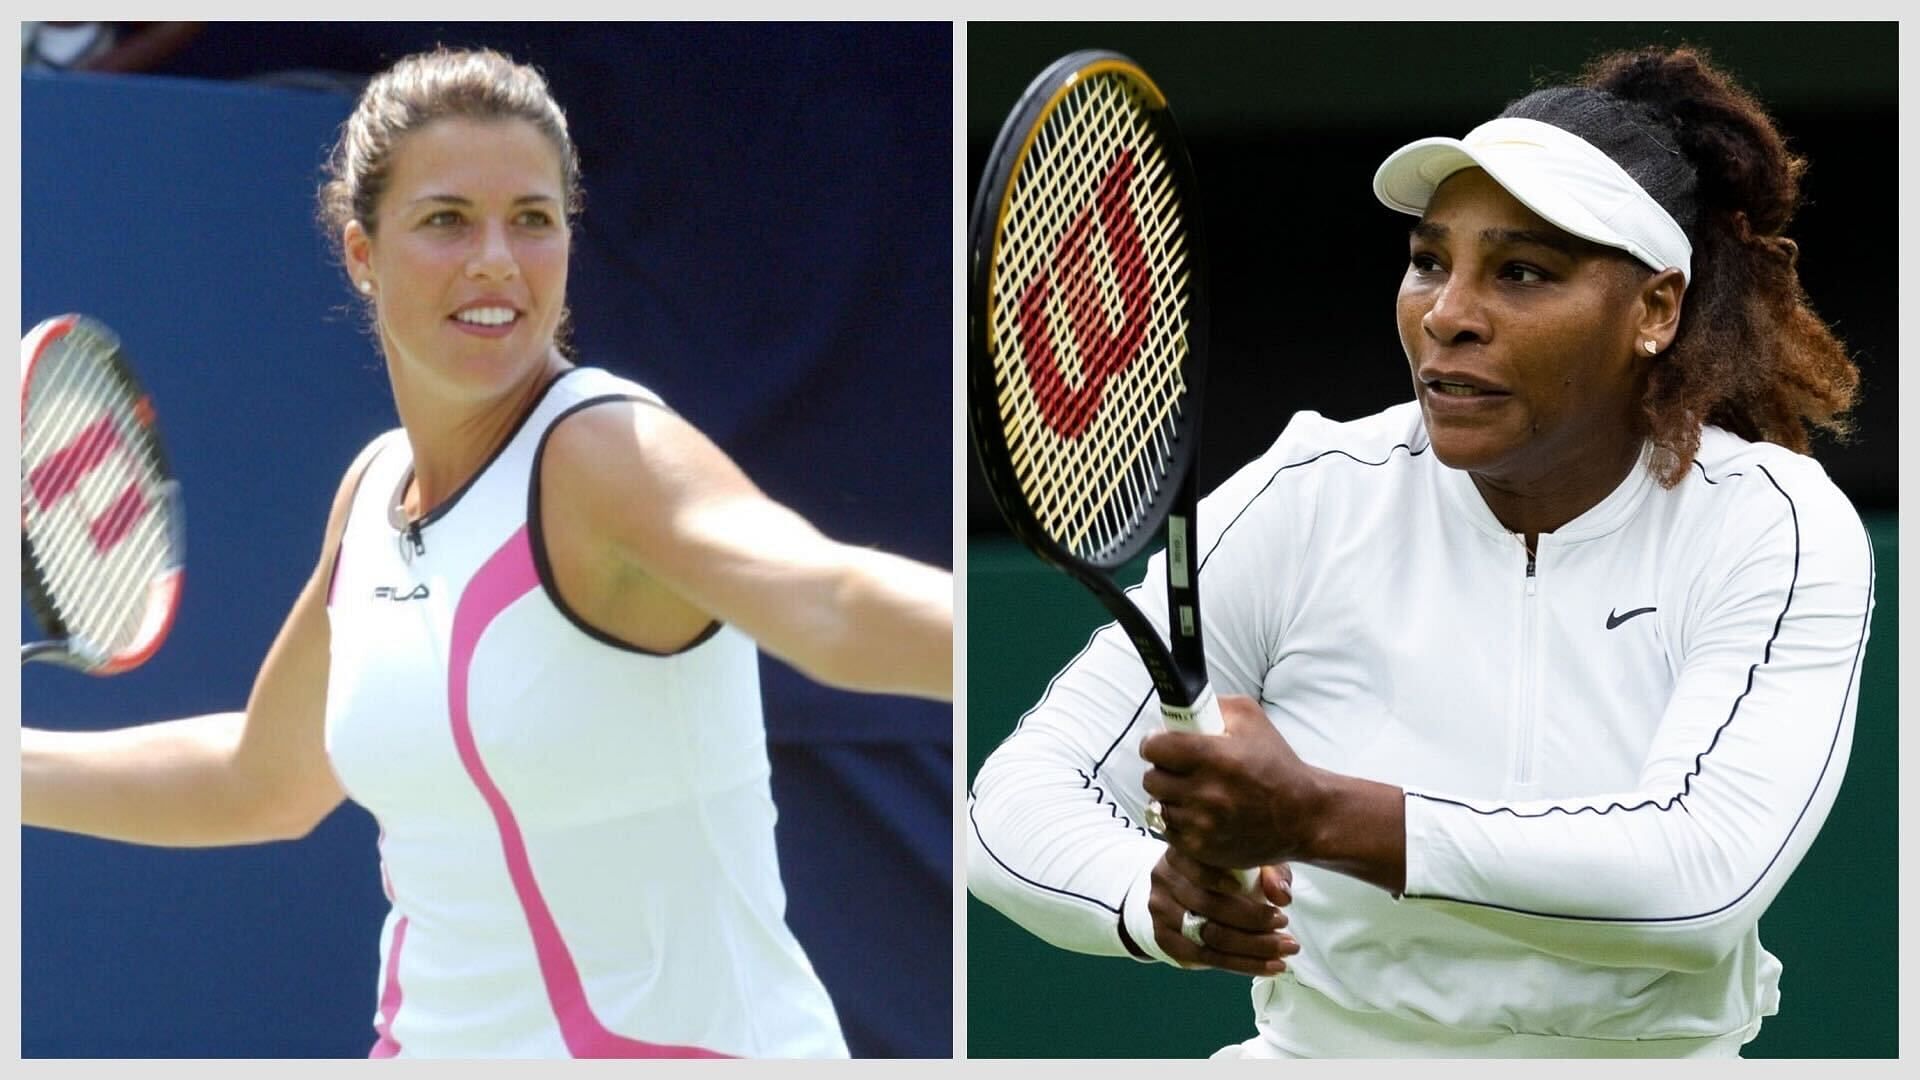 Serena Williams lost to Jennifer Capriati at the 2004 US Open.